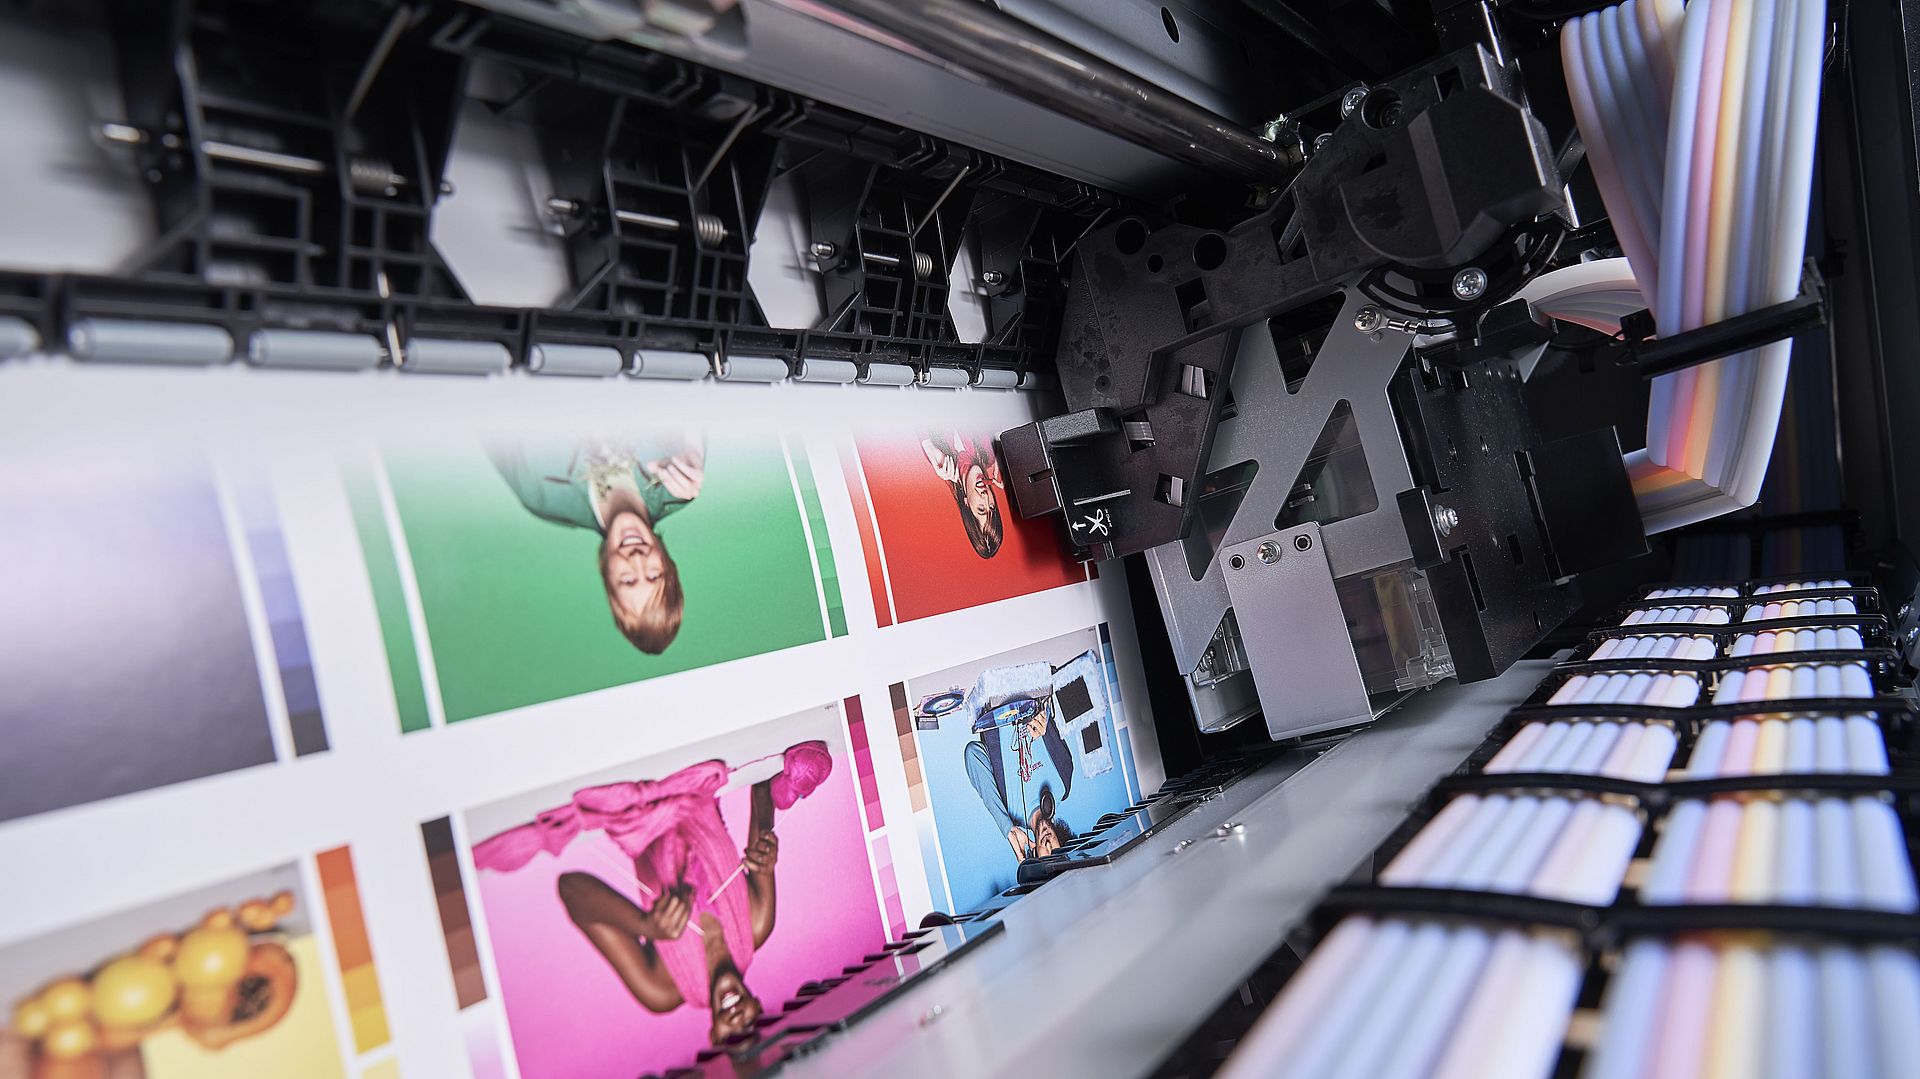 Inside view of a digital printer